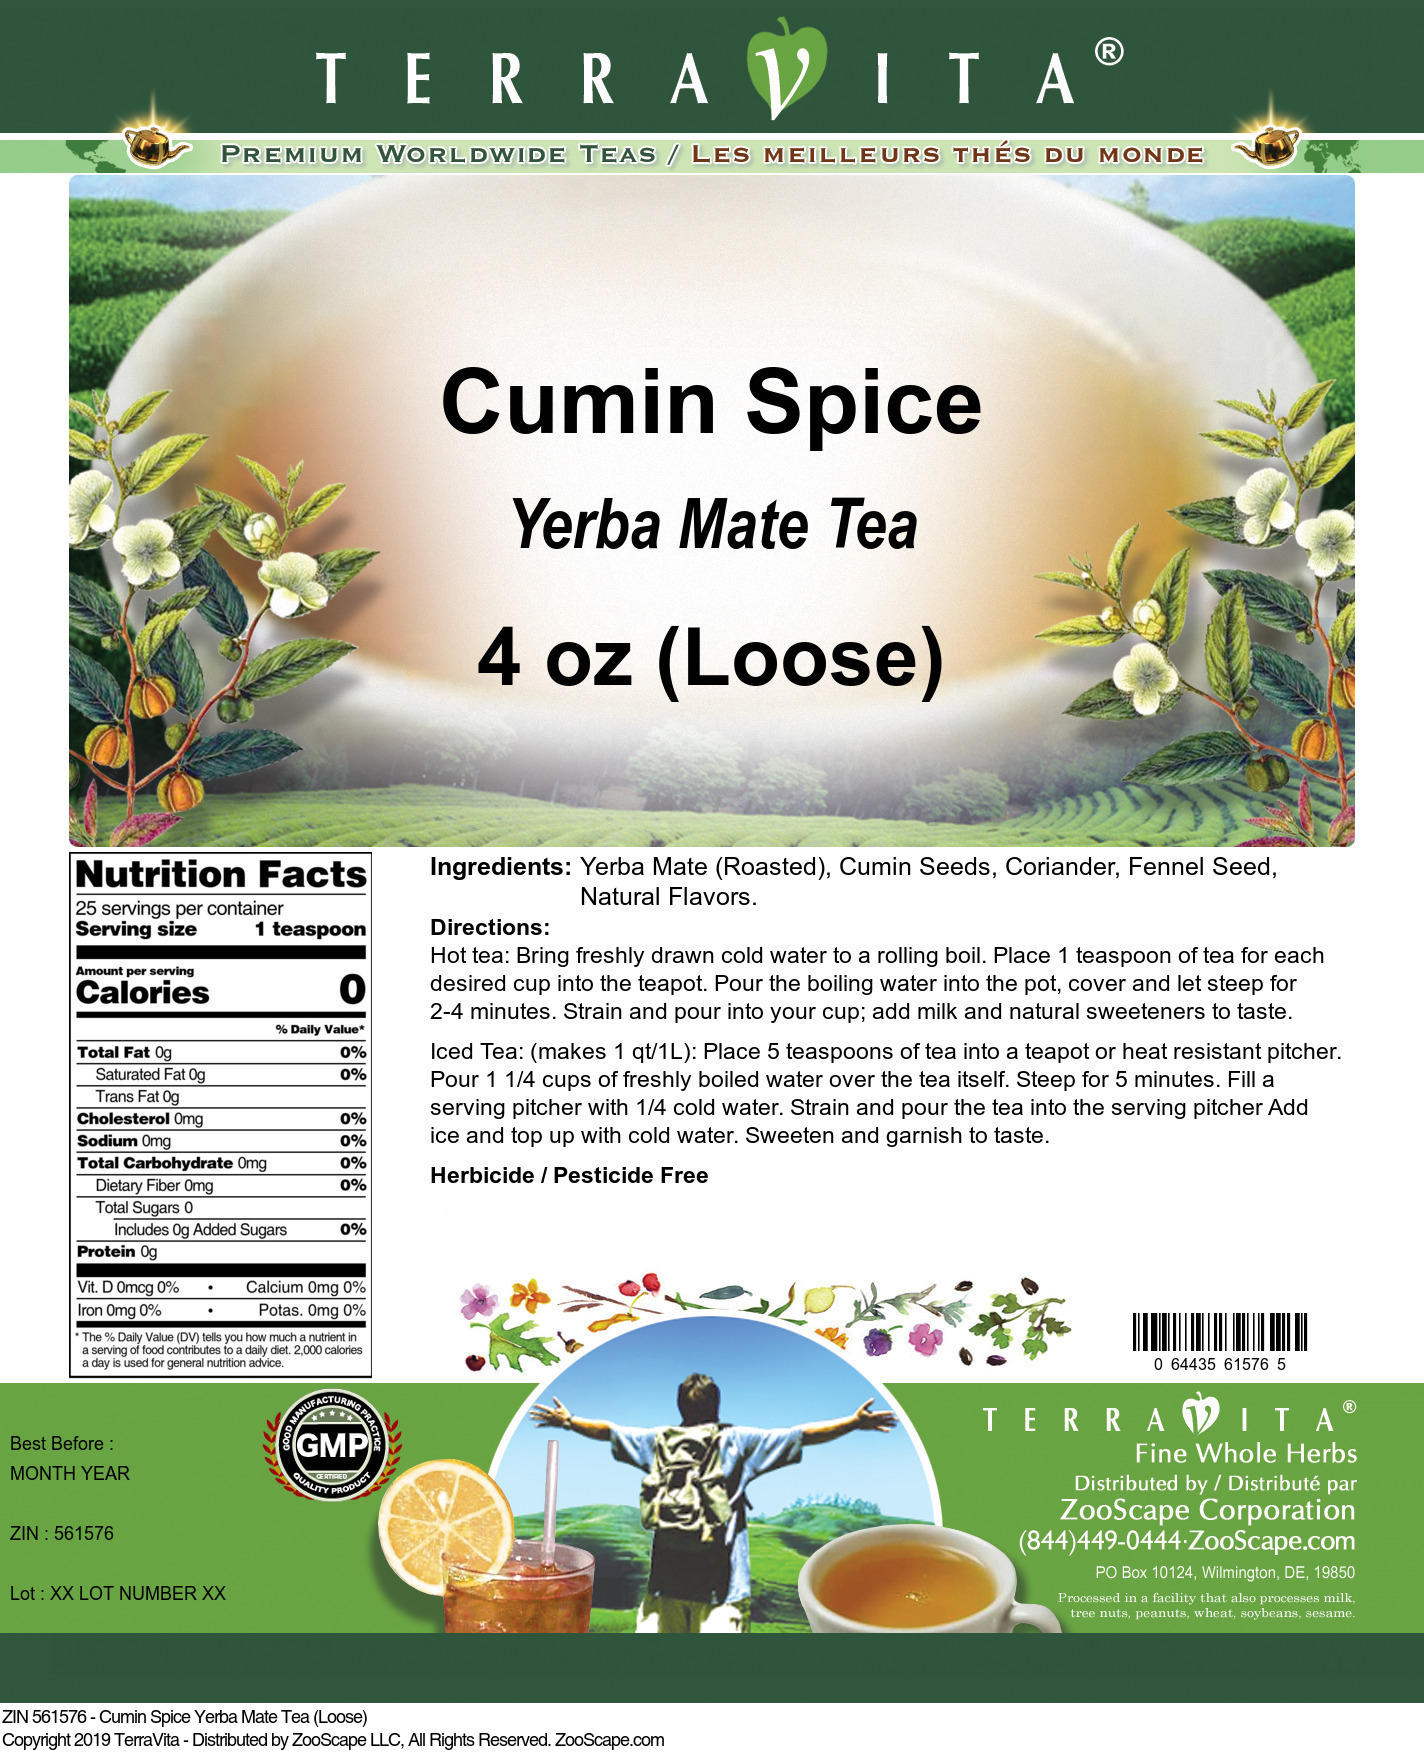 Cumin Spice Yerba Mate Tea (Loose) - Label